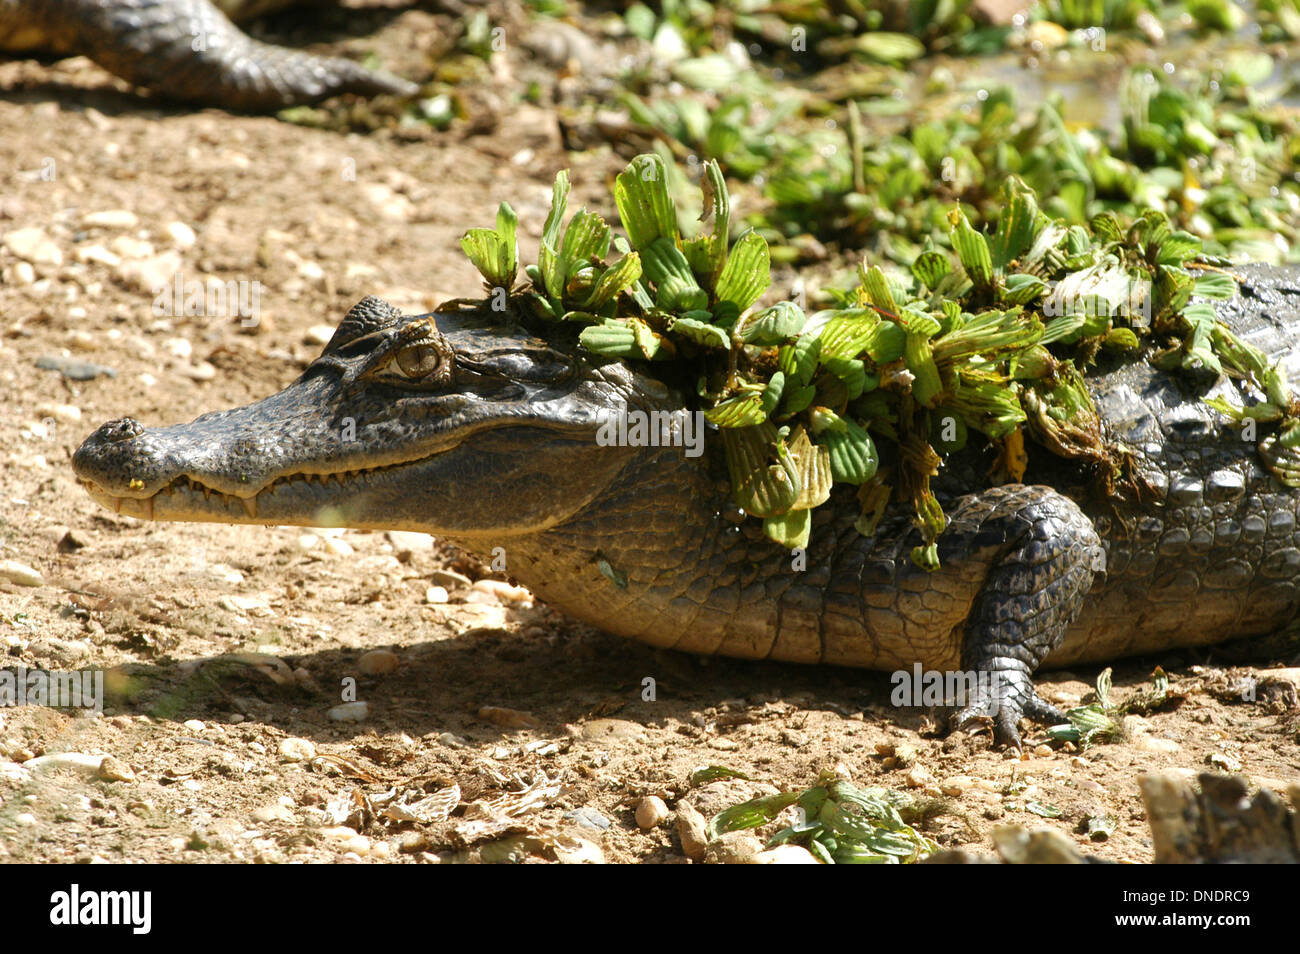 A spectacled caiman (Caiman crocodilus) sunbathes in Guarico State, Venezuela, November 28, 2004. Stock Photo